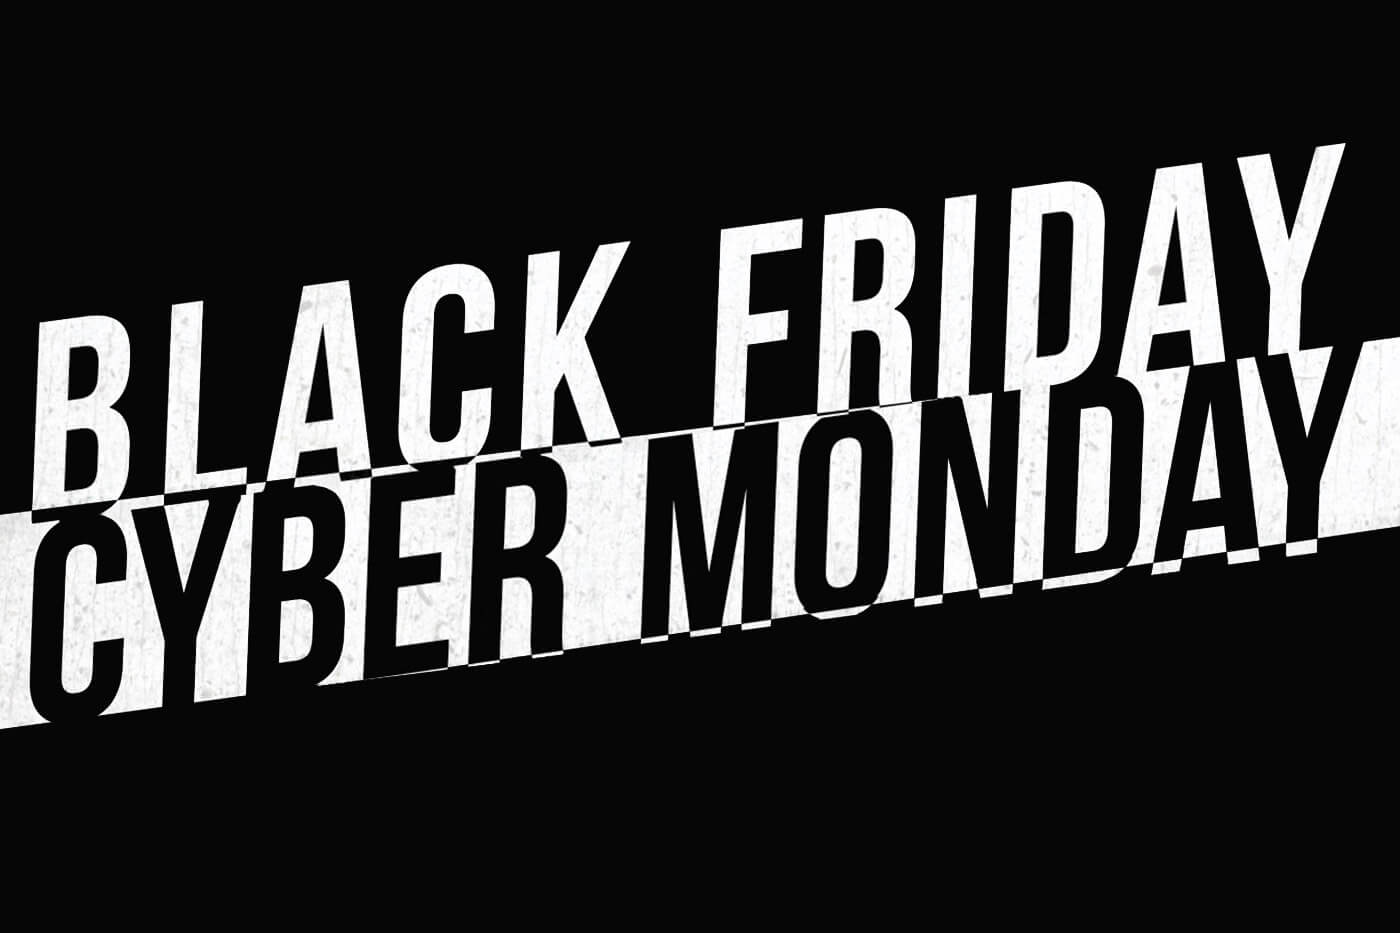 Black Friday Cyber Monday sales